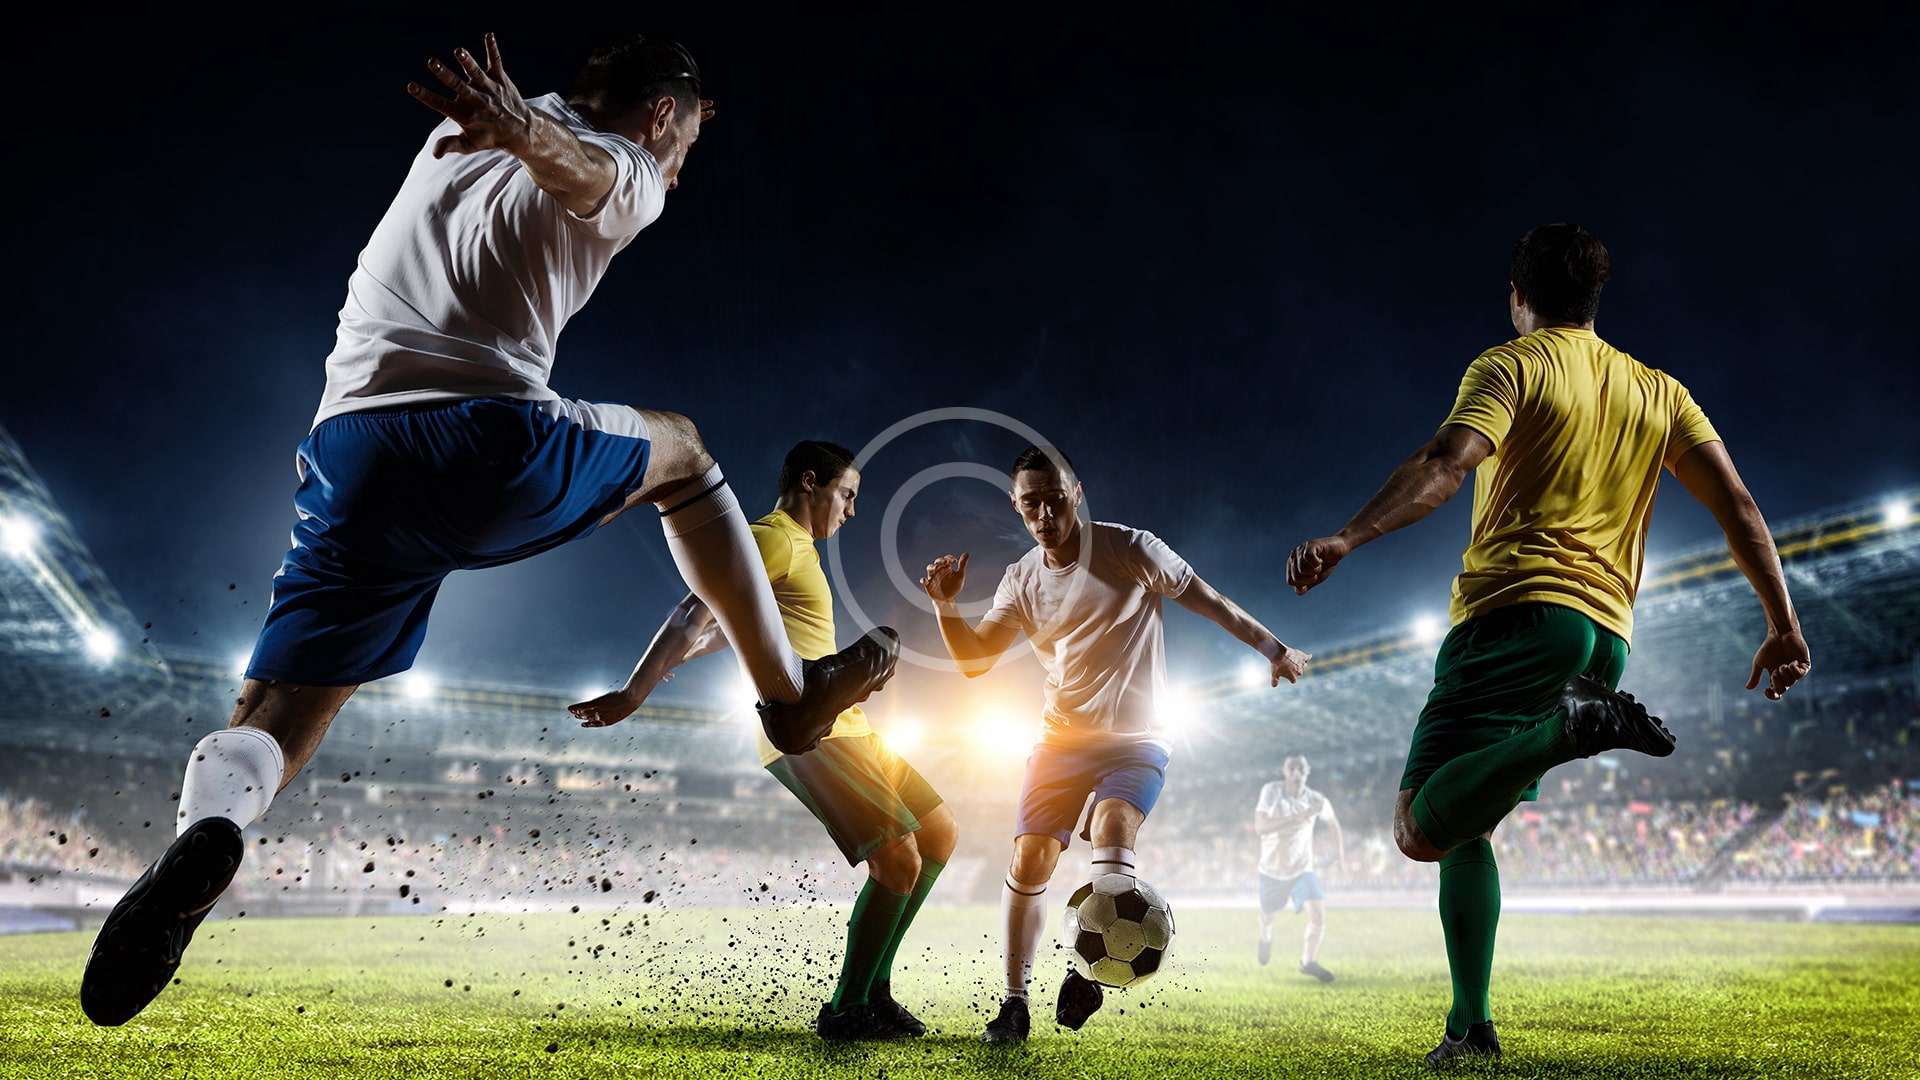 Football is a team game. Футдаблбол. Красивые футбольные моменты. Футбол фото. Футбольные обои.